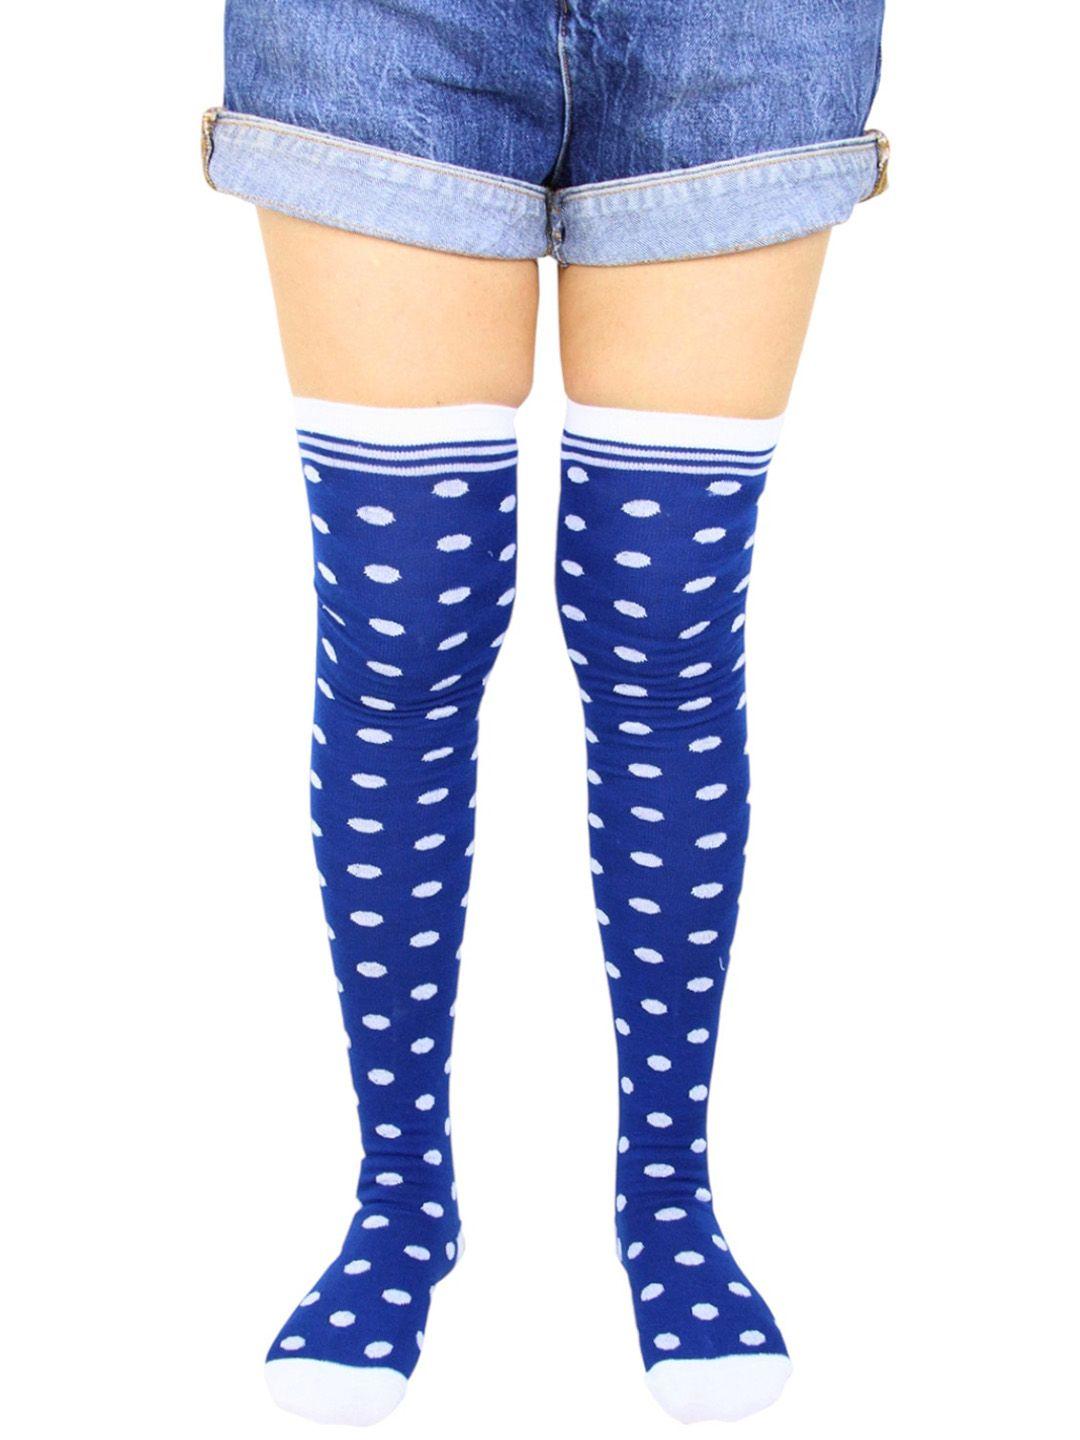 baesd polka dot printed thigh-high stockings